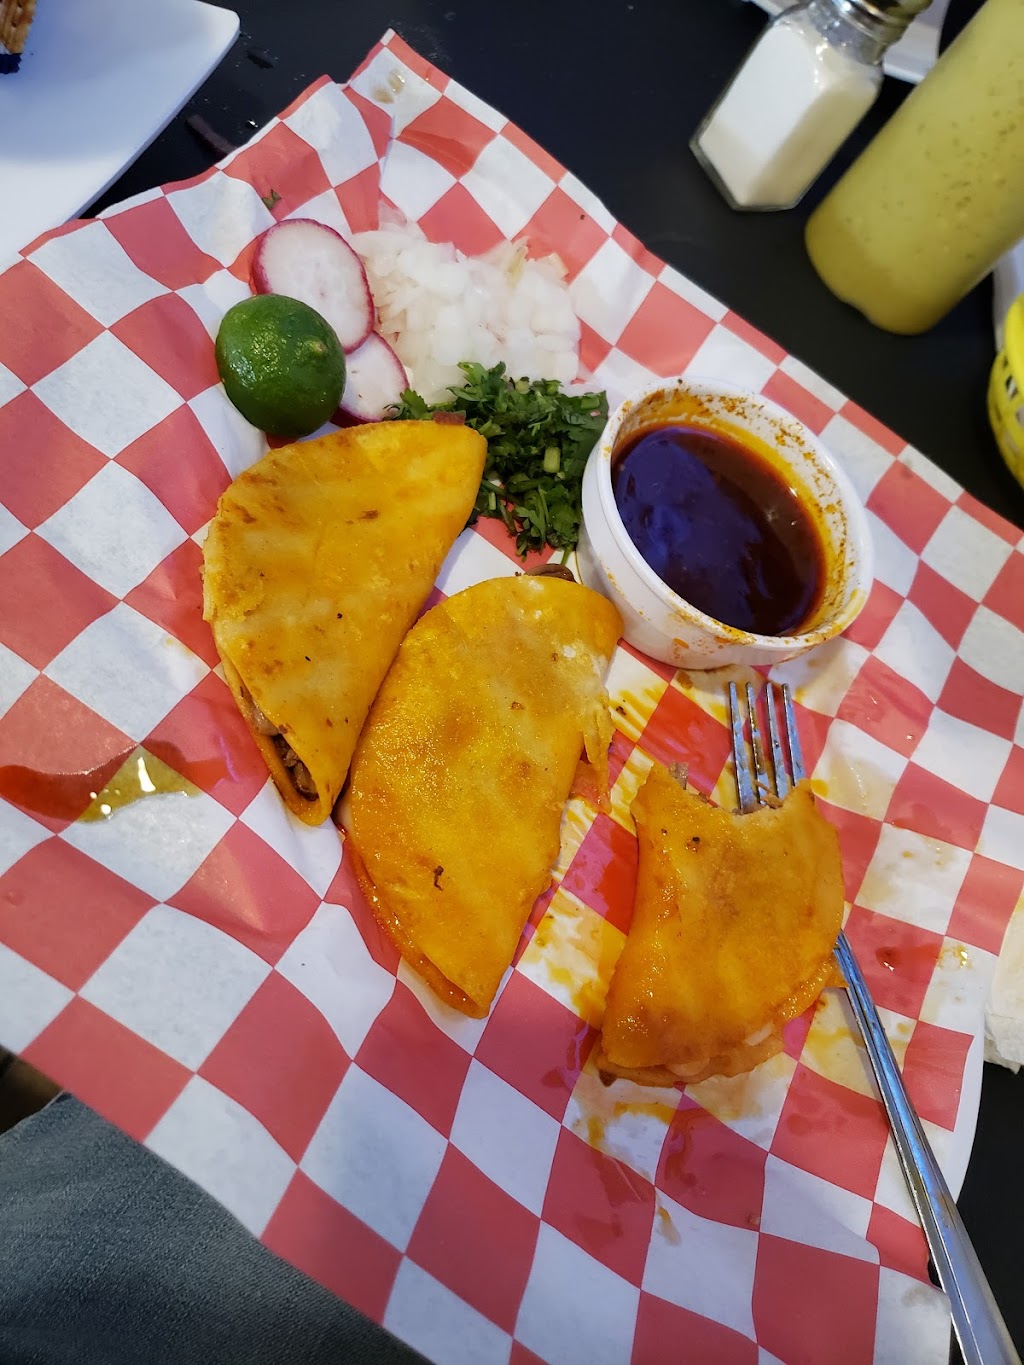 Tacos "El Güero" de Culiacán | 10097 N Loop Dr, Socorro, TX 79927, USA | Phone: (915) 300-0276